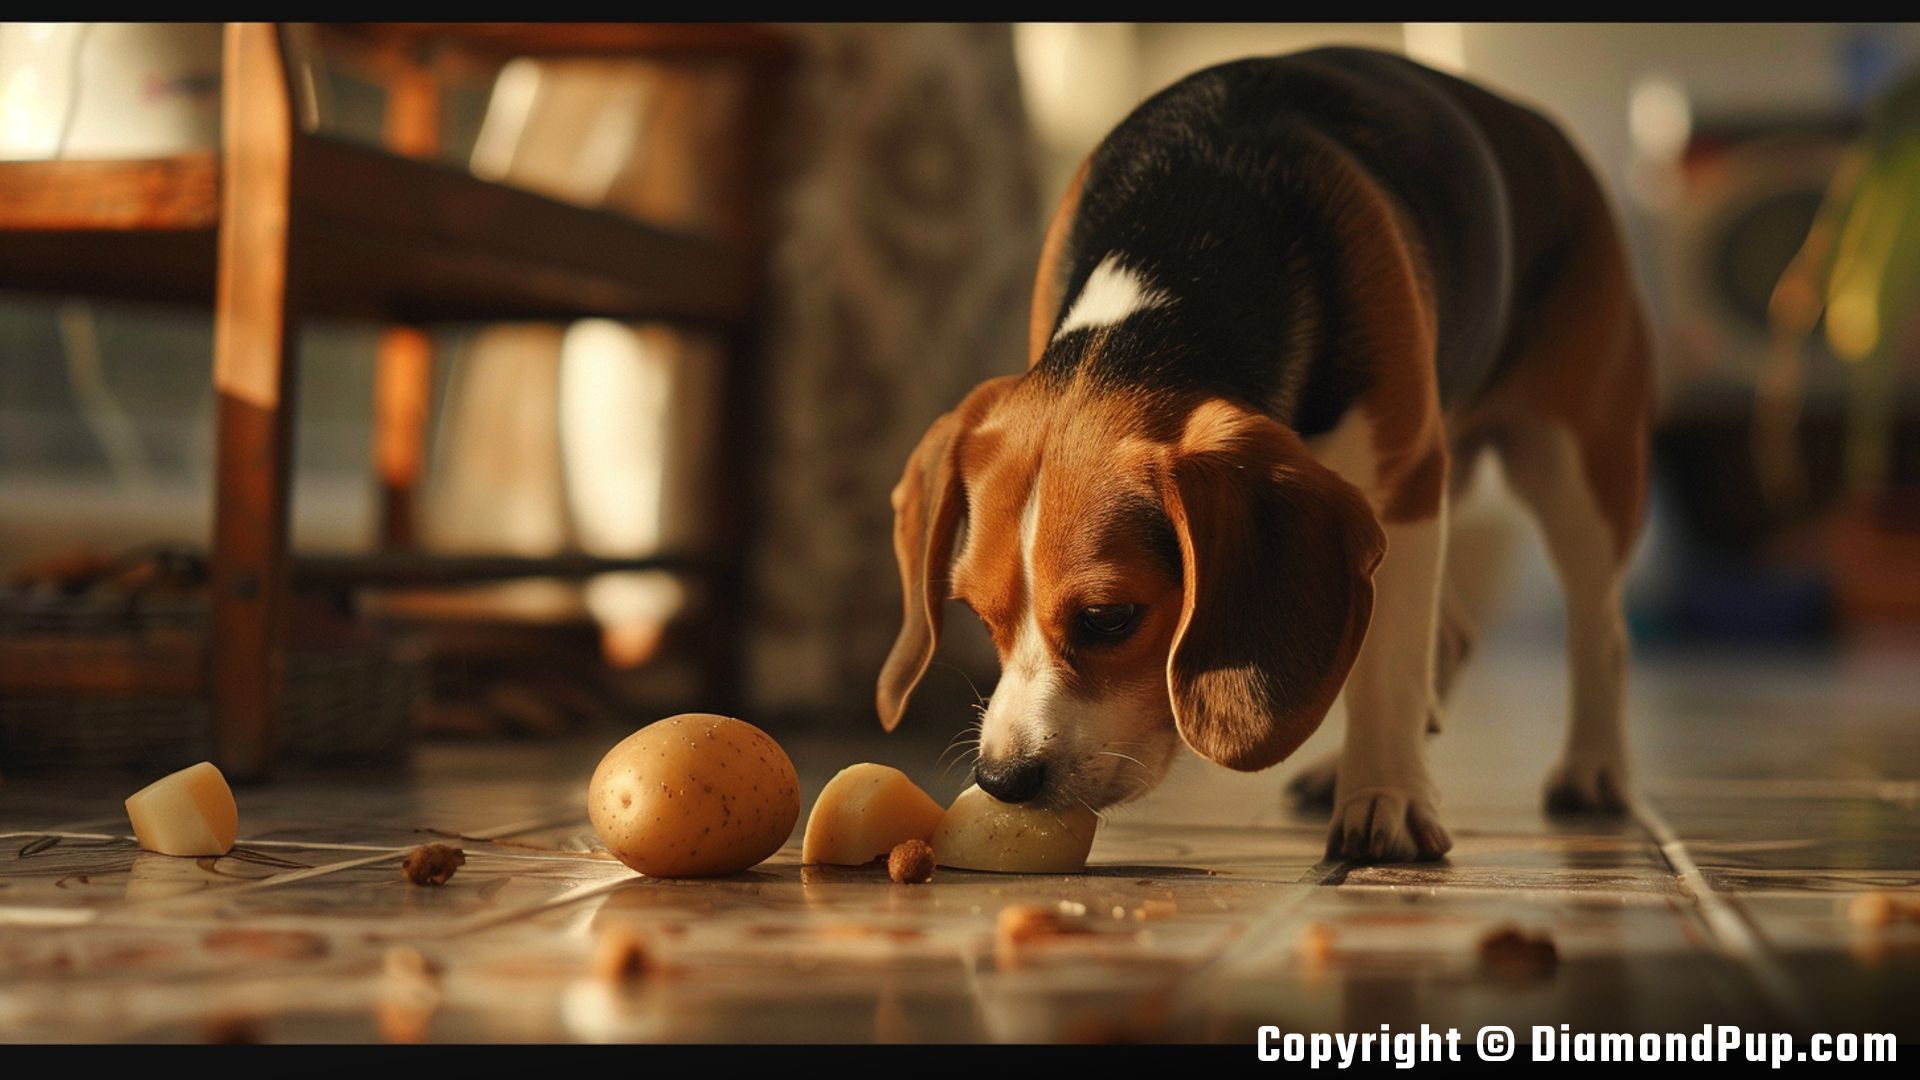 Photograph of a Cute Beagle Eating Potato